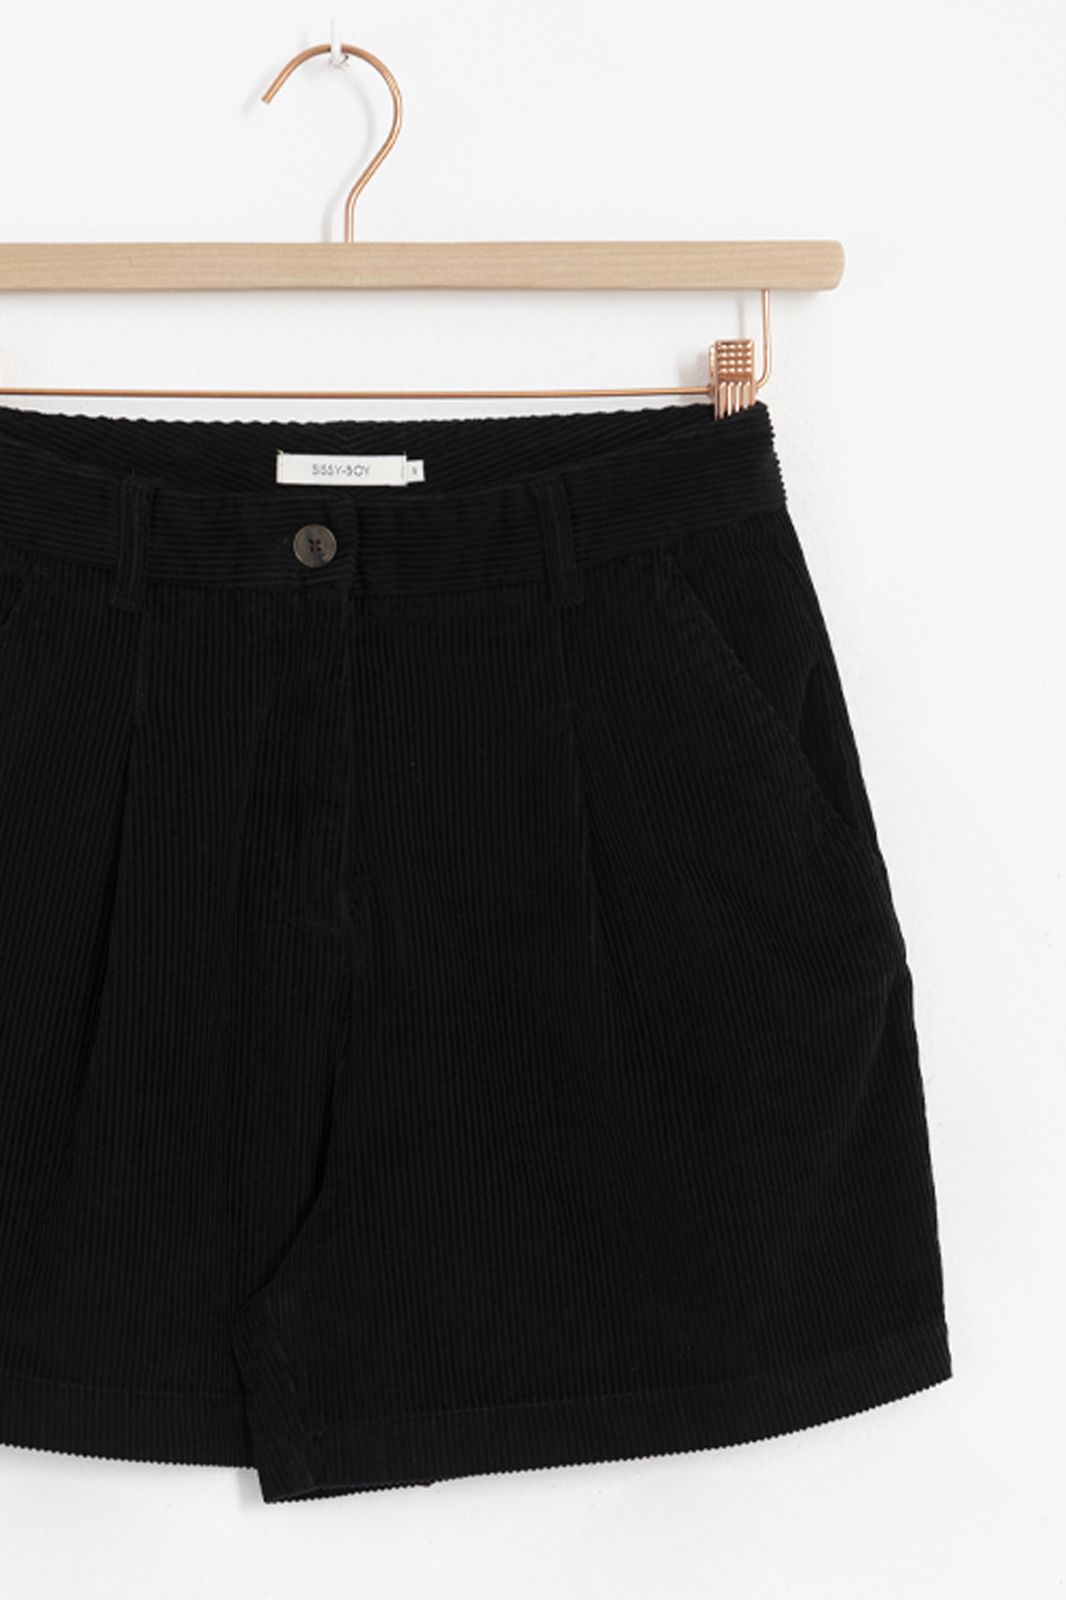 Gemakkelijk haalbaar dwaas Zwarte corduroy shorts - Dames | Sissy-Boy